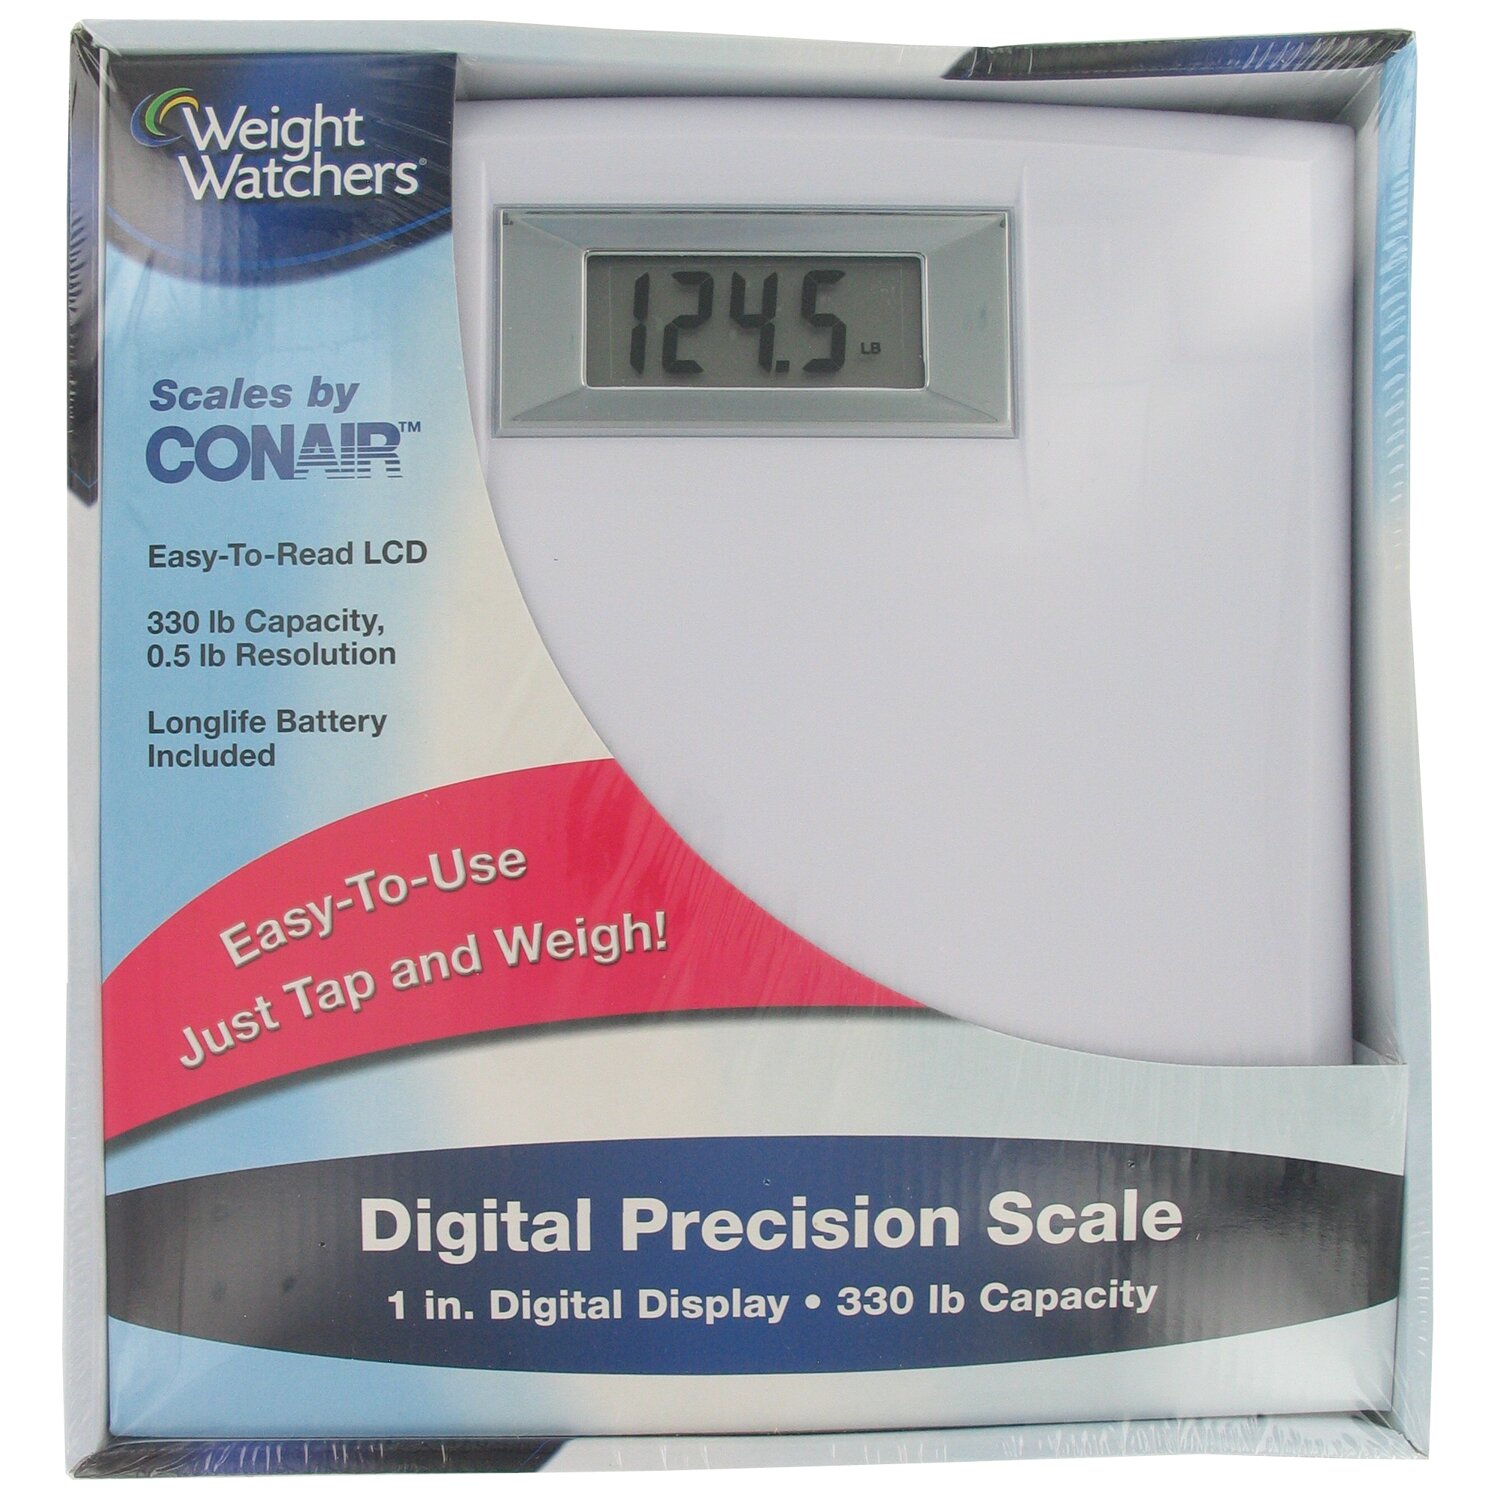 Conair Weight Watchers Digital Precision Scale & Reviews | Wayfair